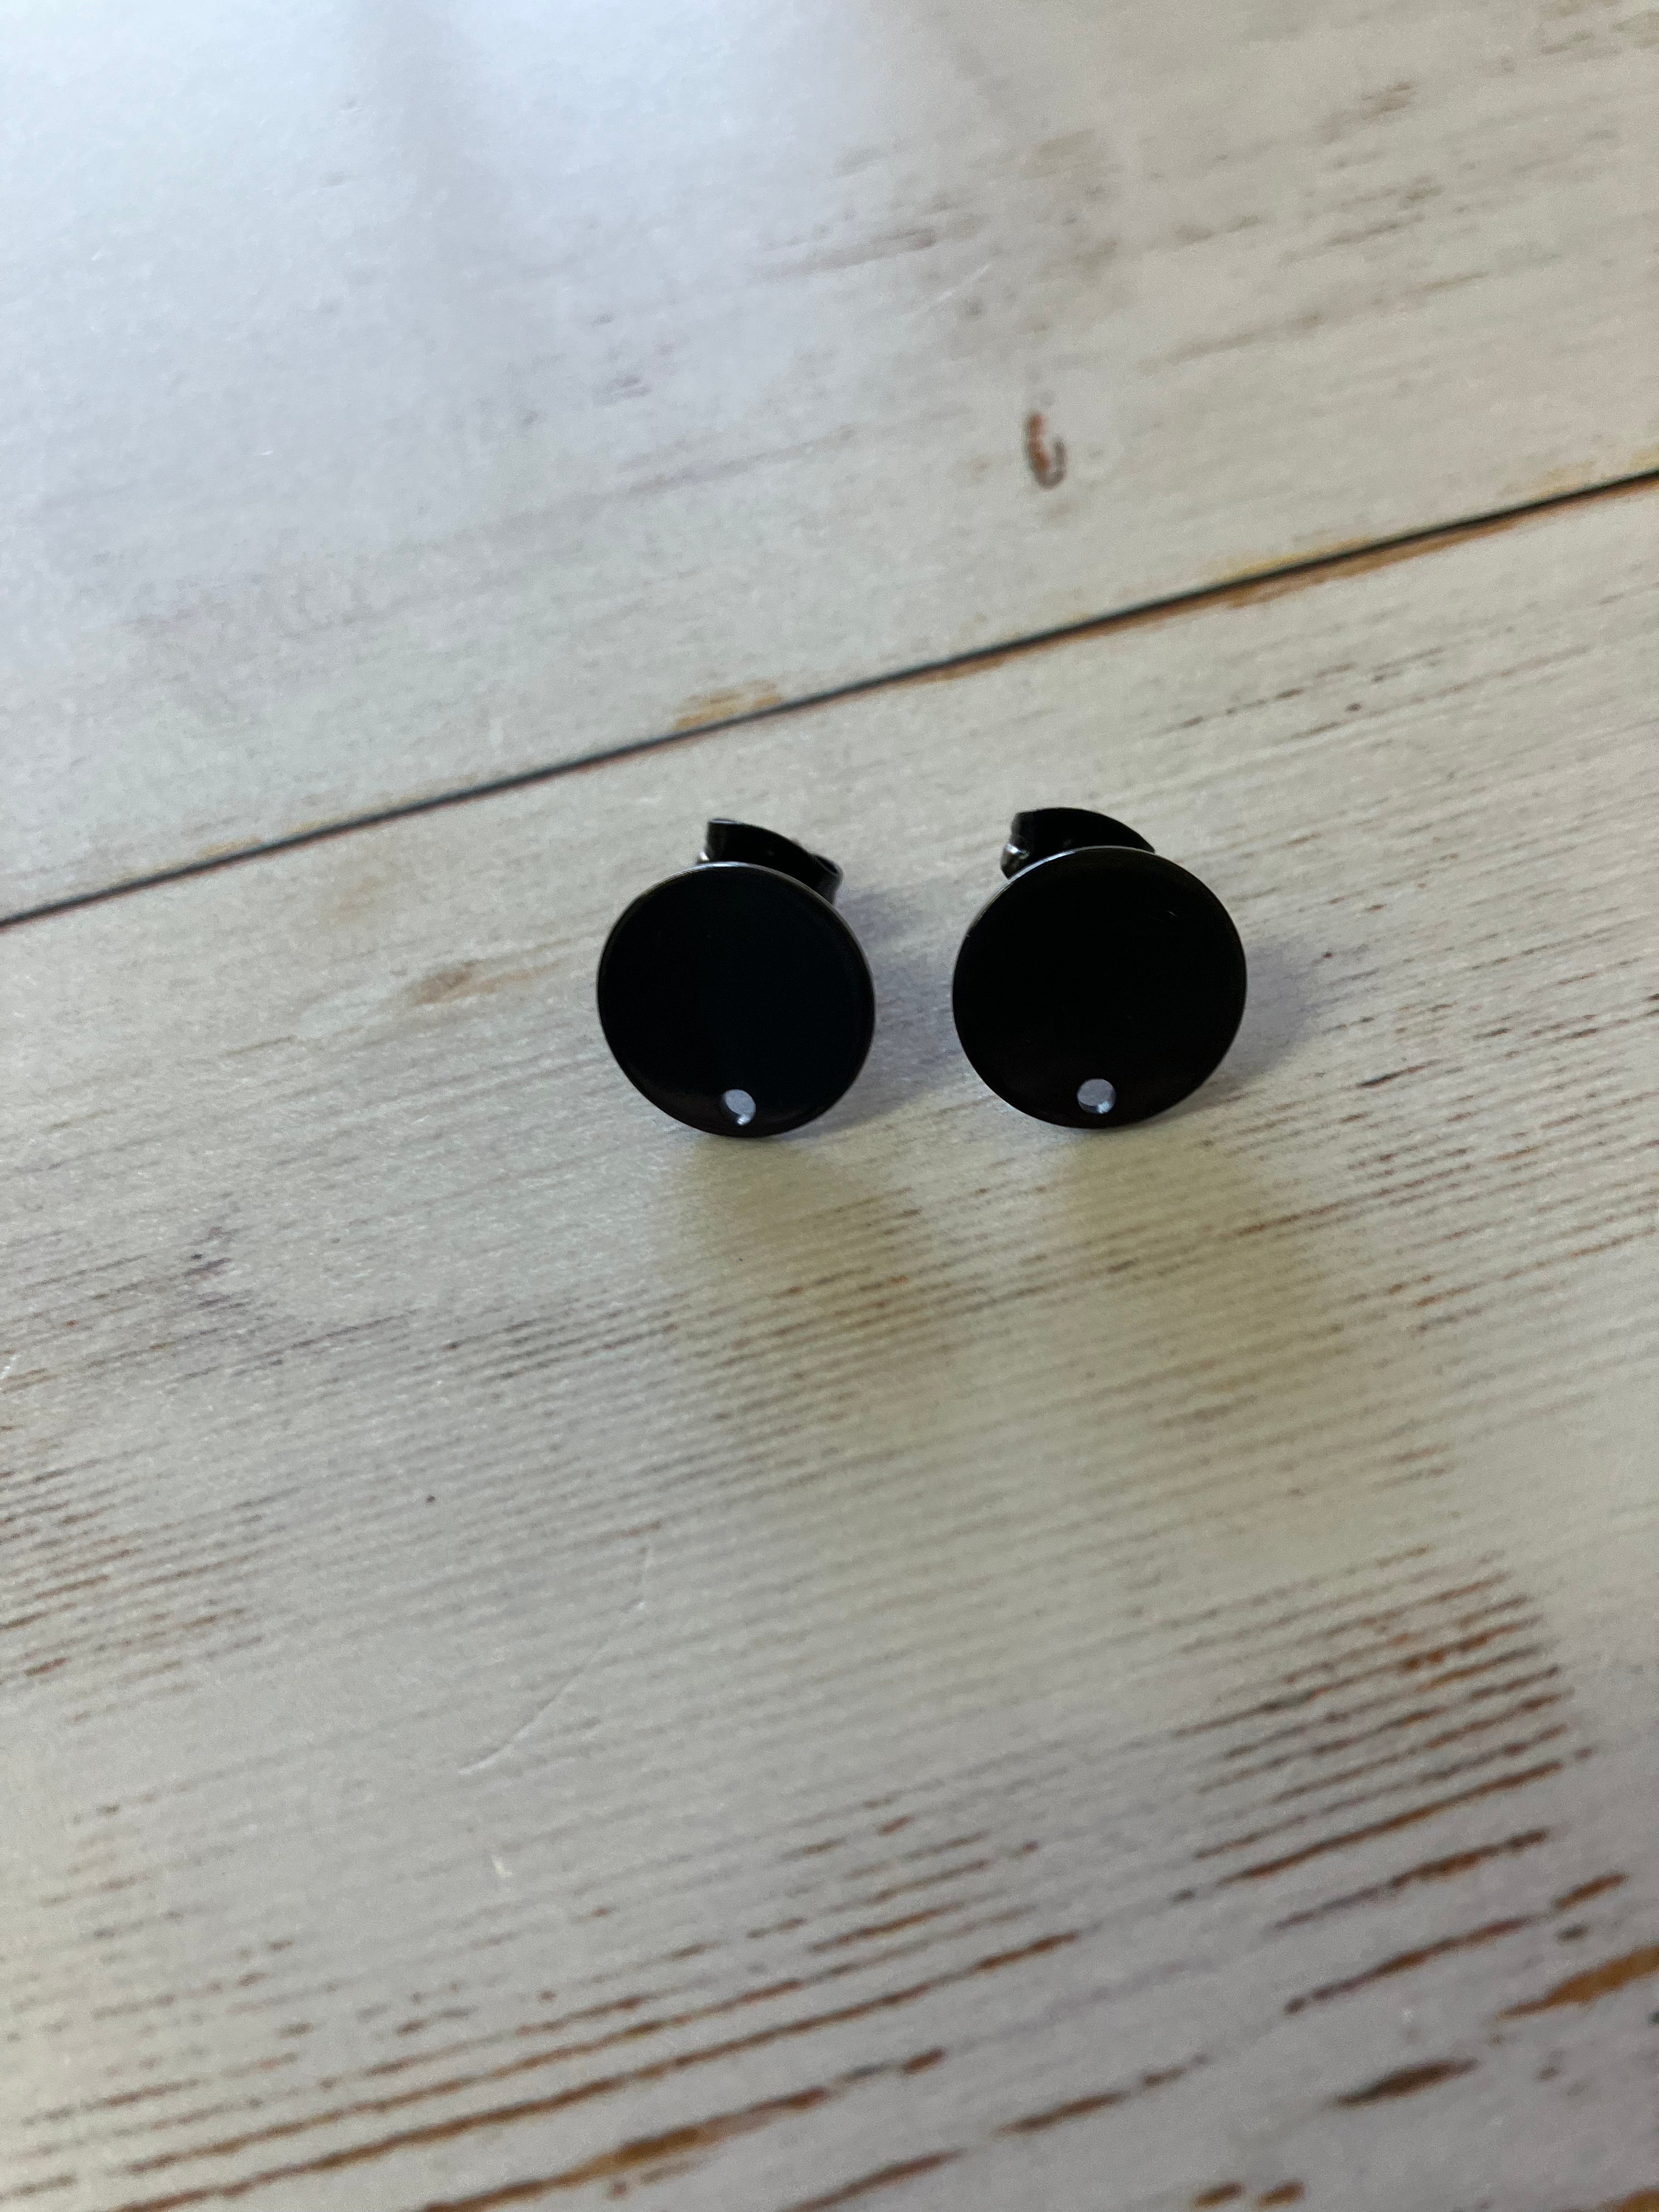 304 Stainless Steel Stud Earring Findings, with Loop and Flat Plate, Ear Nuts/Earring Backs, Flat Round, Electrophoresis Black (1 Pair)